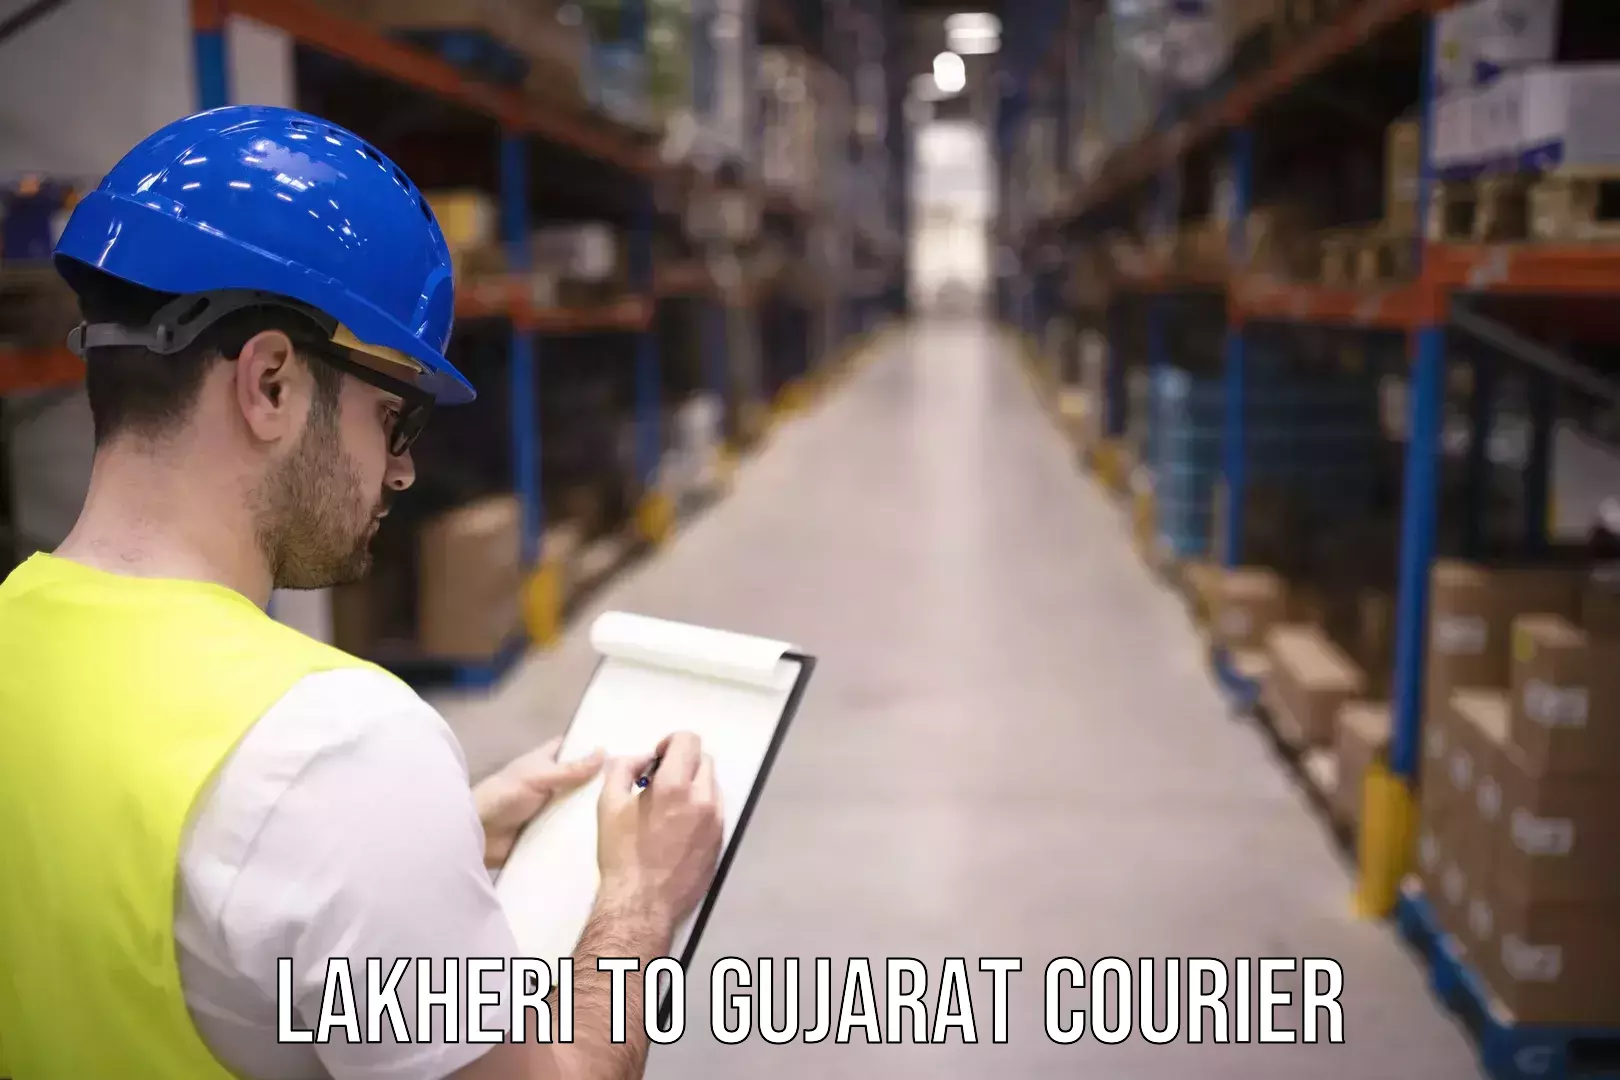 Speedy delivery service Lakheri to Gujarat